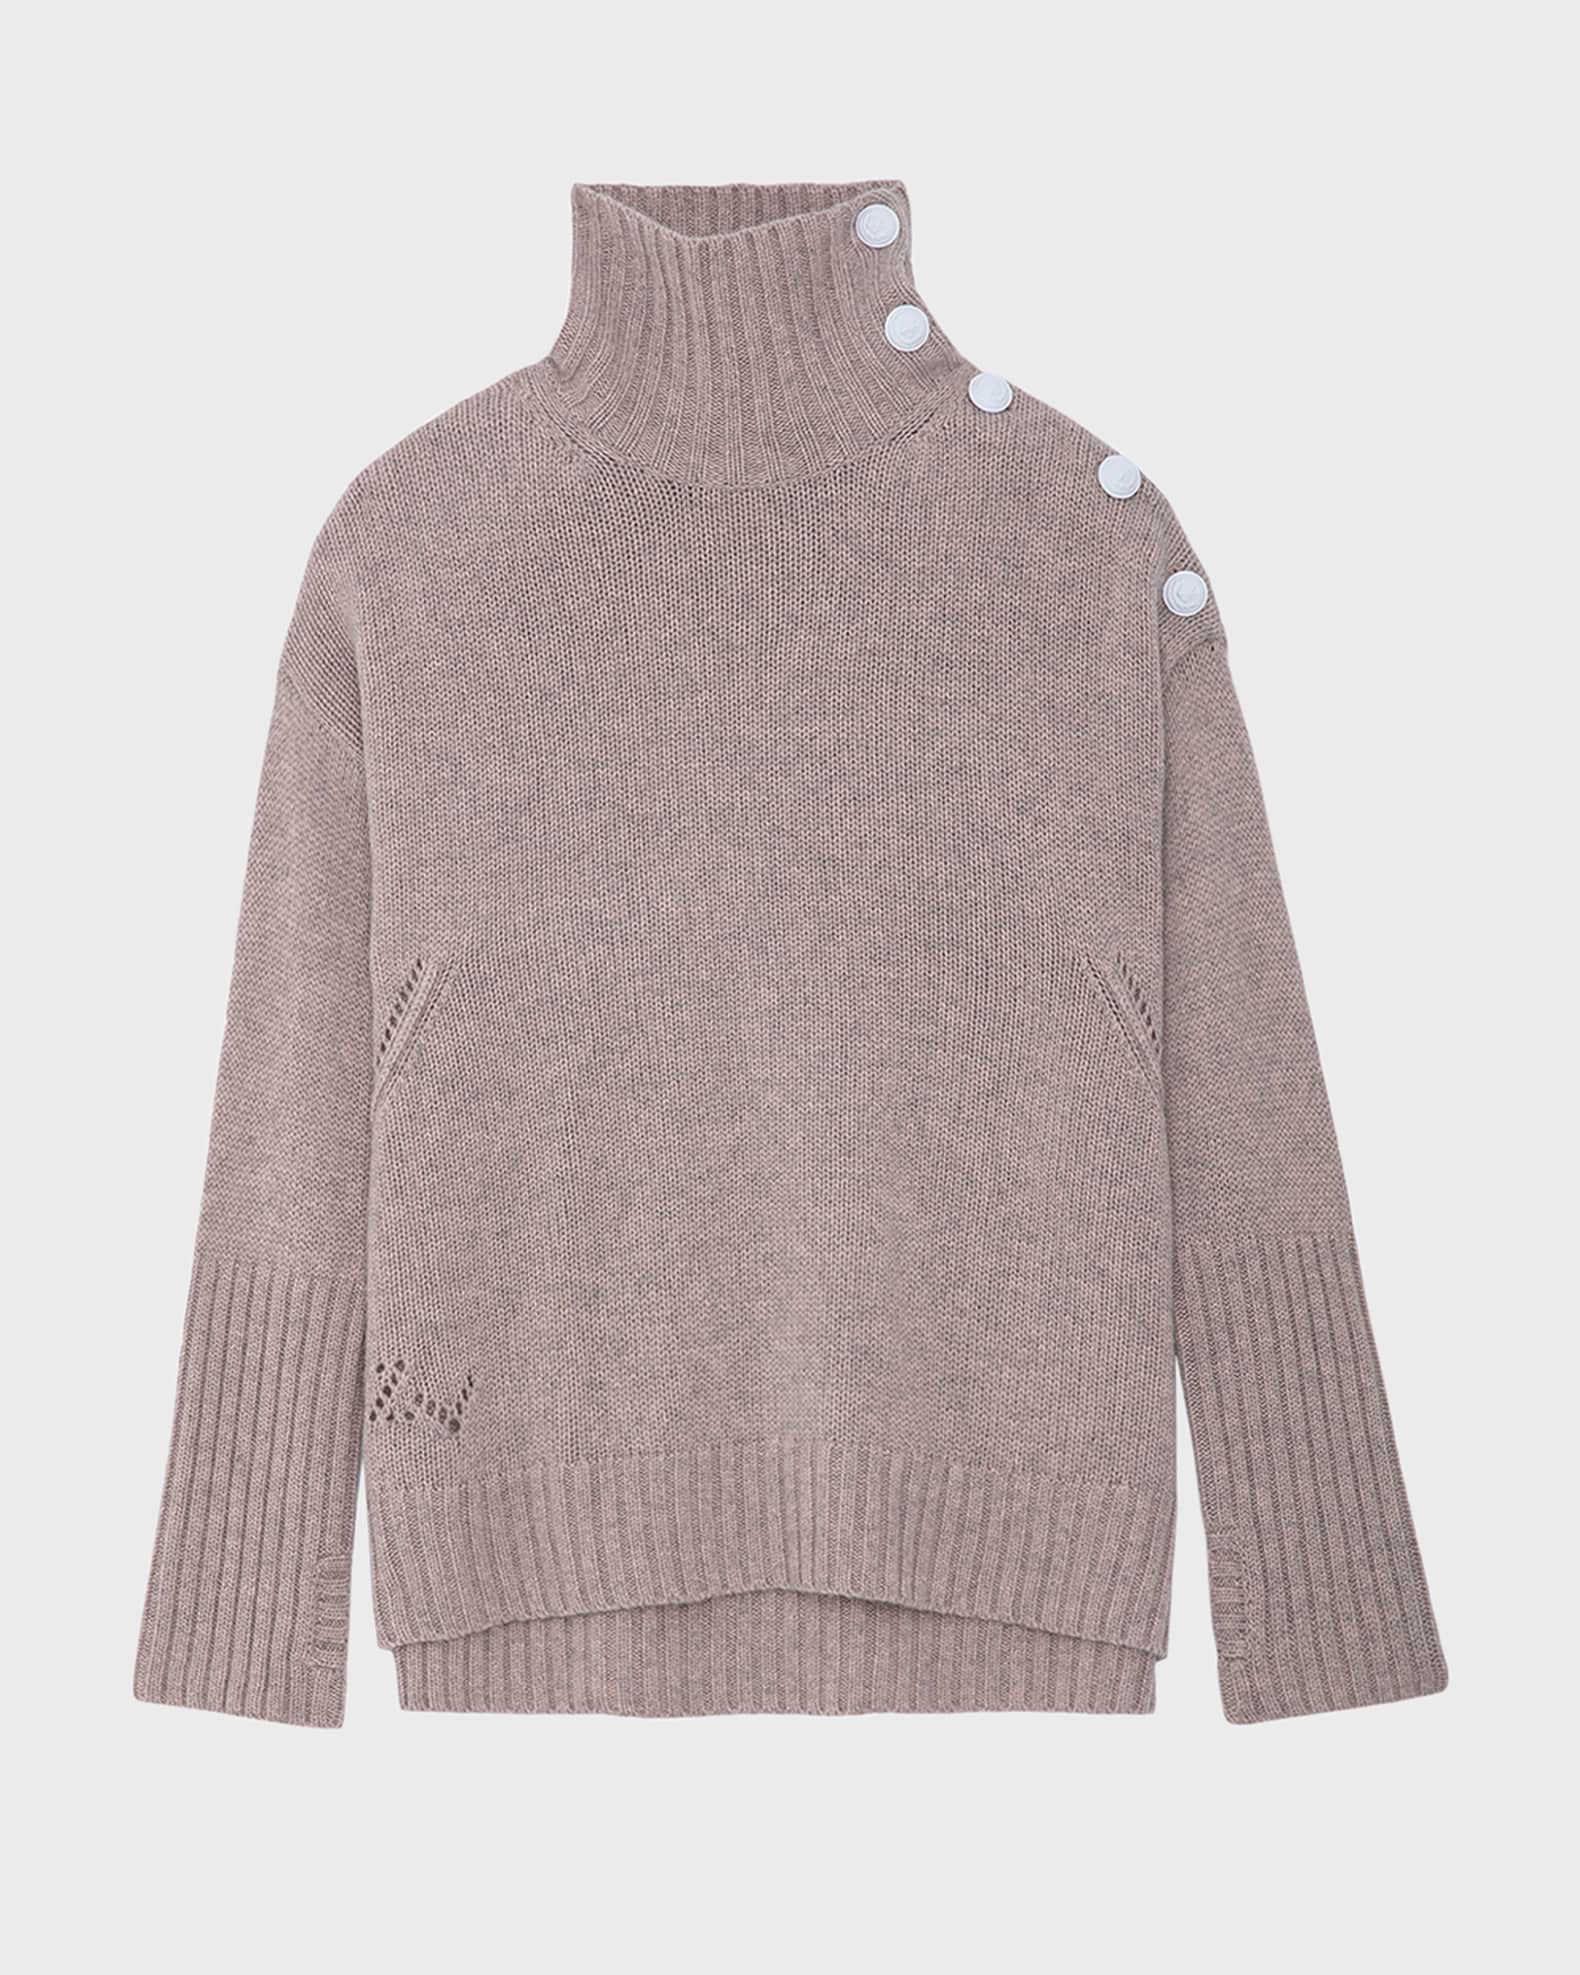 Zadig & Voltaire Alma Cashmere Turtleneck Sweater | Neiman Marcus